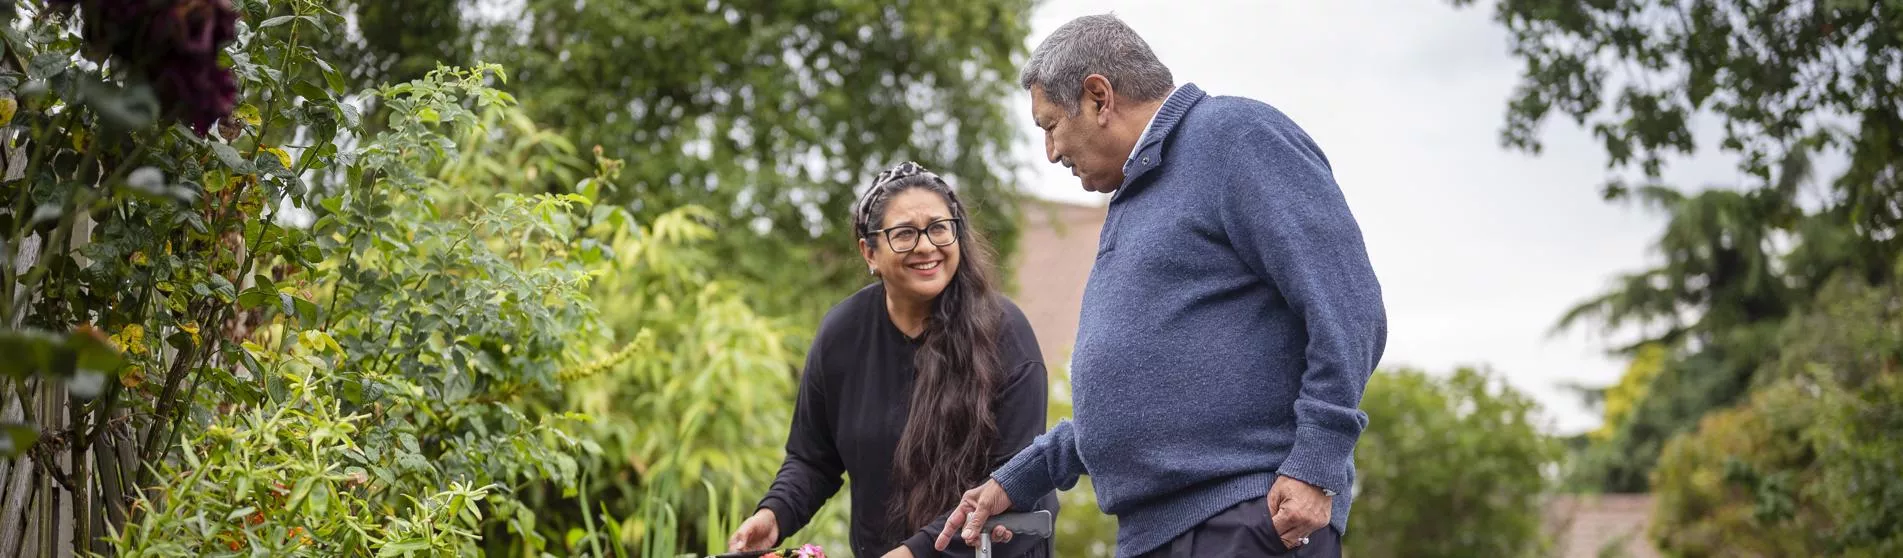 Women helping older man in garden - Touchstone’s Sikh Elders Service Leeds